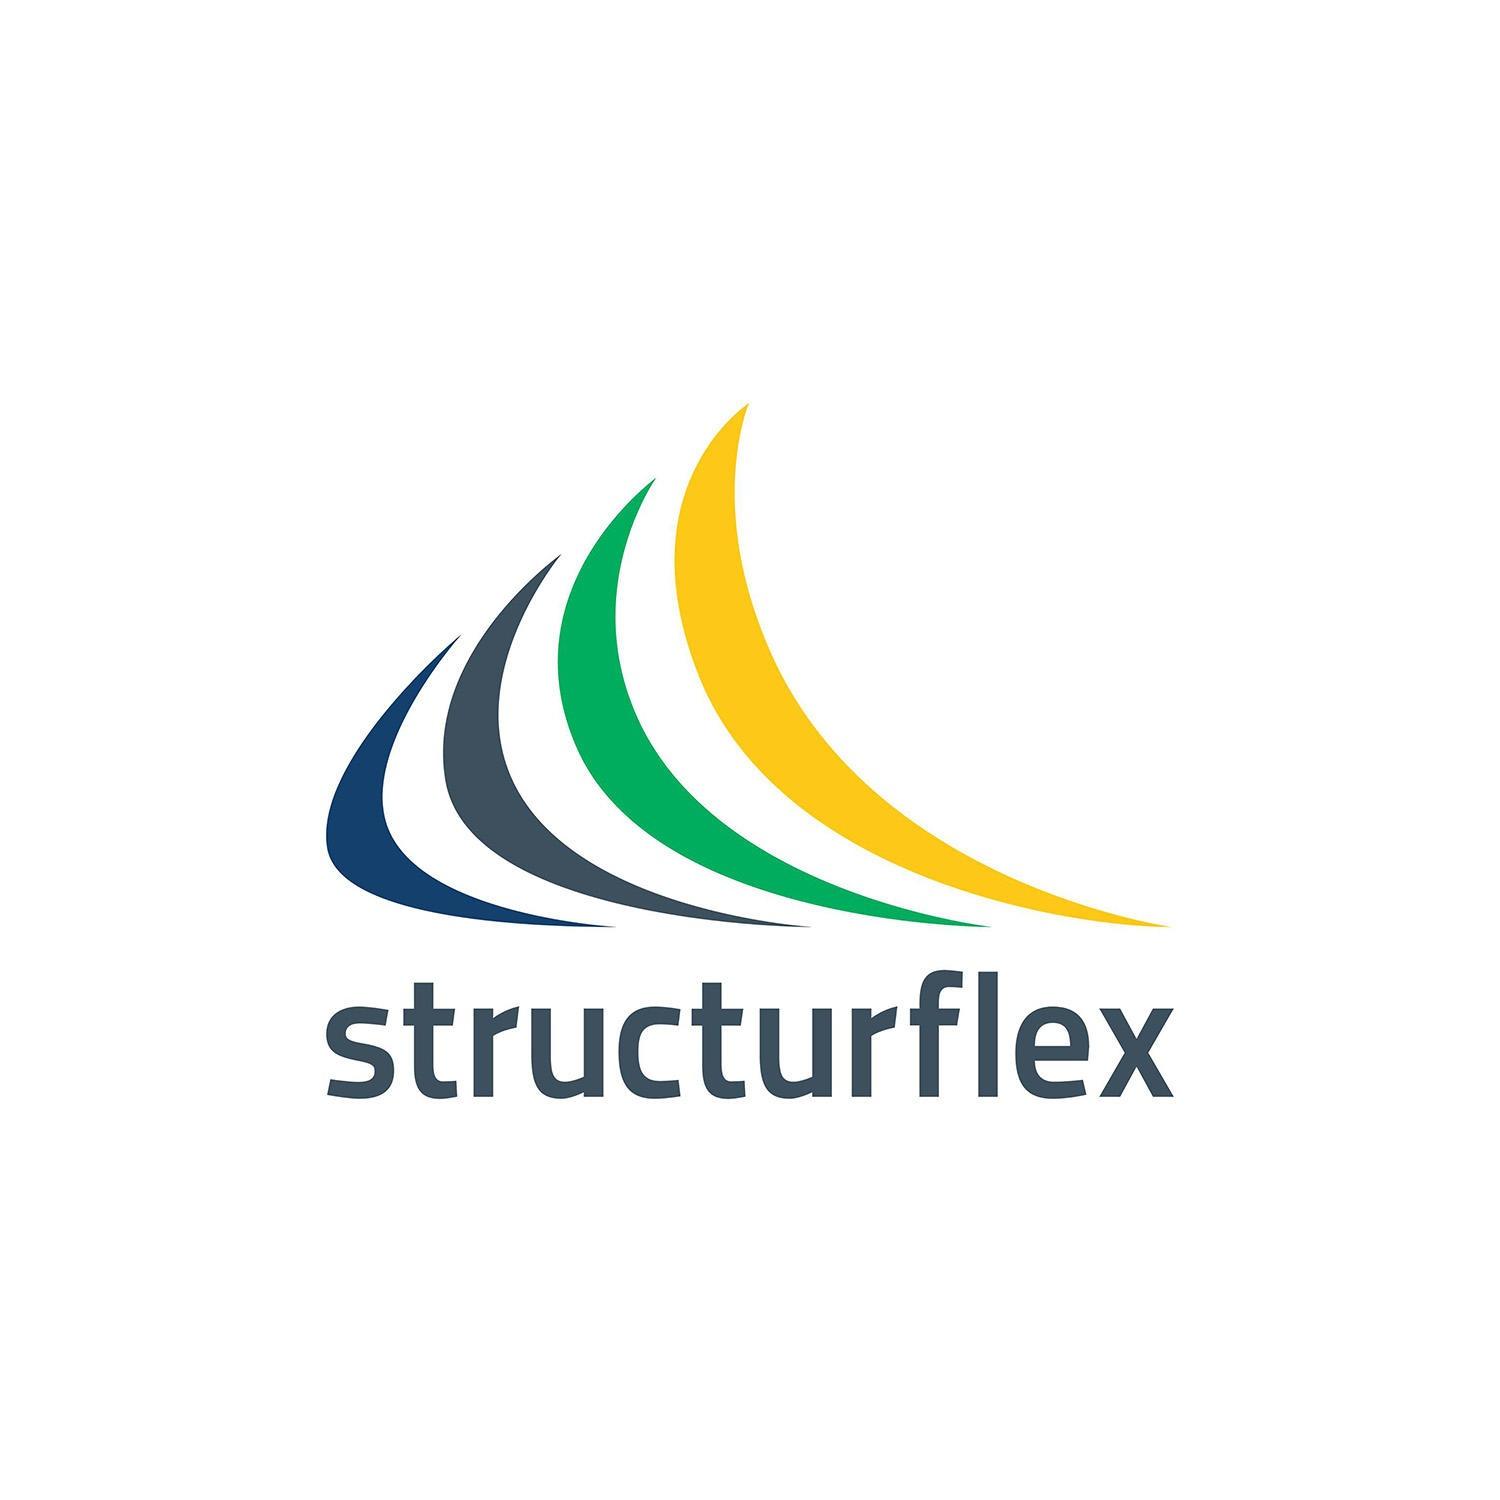 Structurflex LLC - Merriam, MO 66203 - (816)889-9000 | ShowMeLocal.com